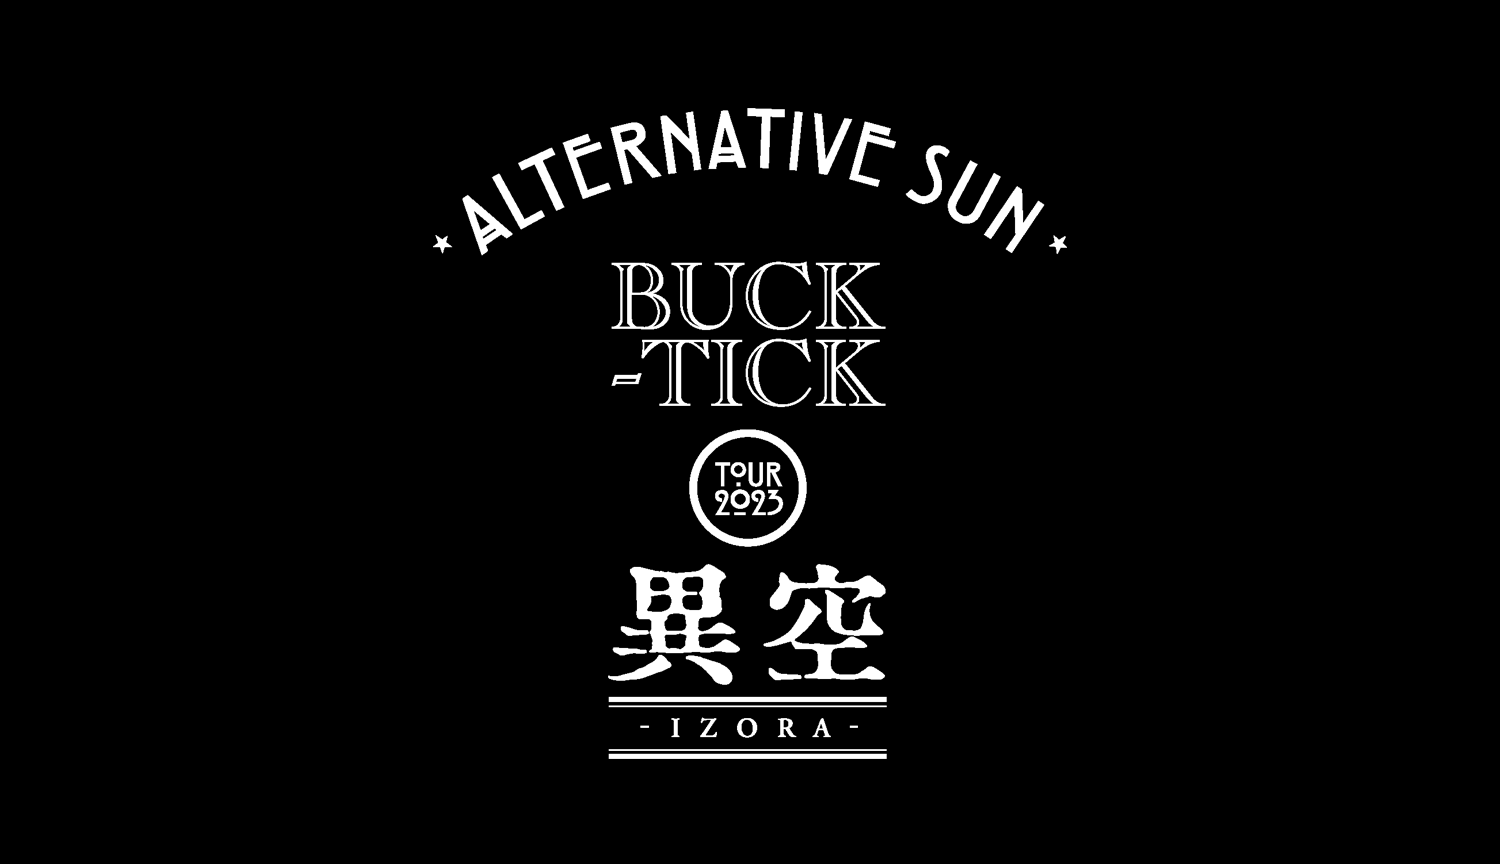 BUCK-TICK TOUR 2023 異空-IZORA- ALTERNATIVE SUN